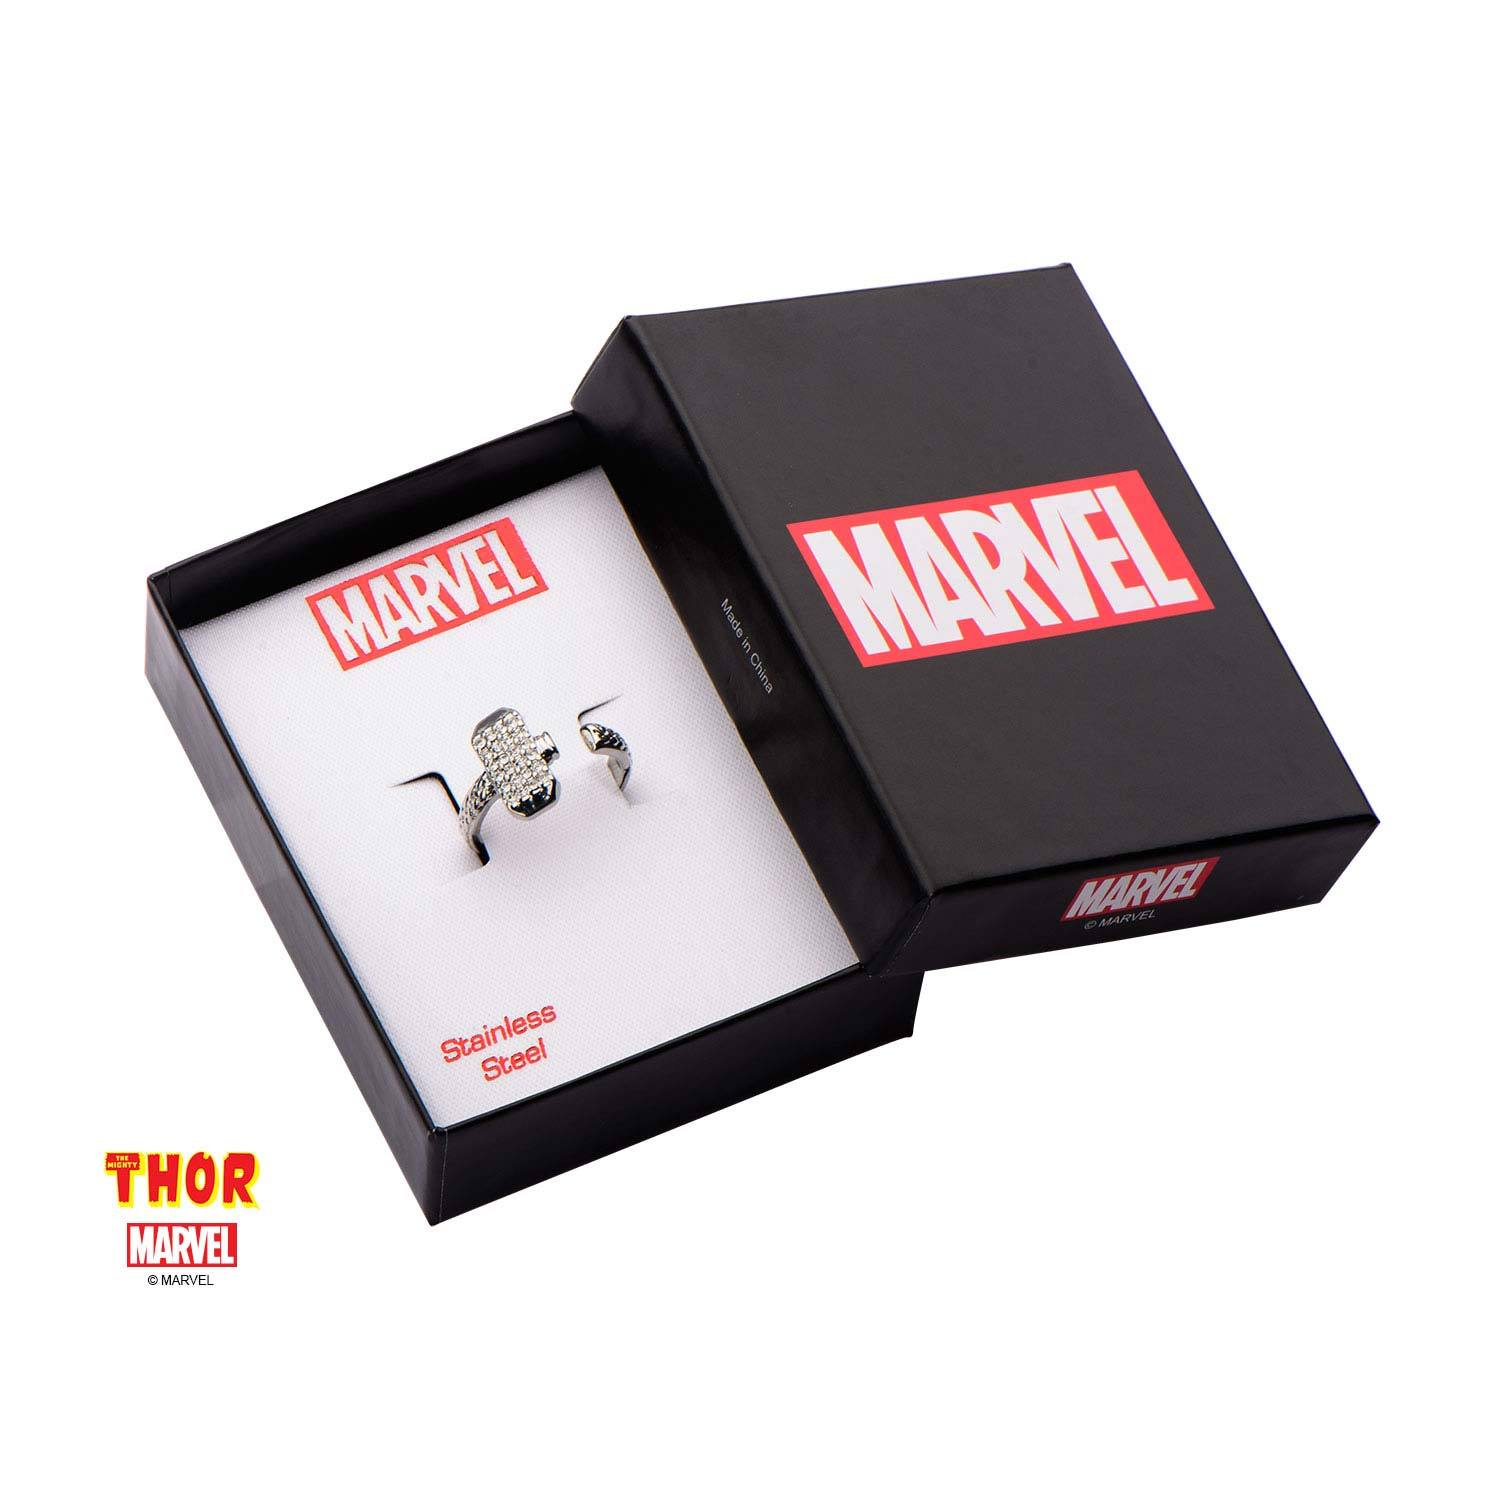 Marvel's Thor Stainless Steel+ Cubic Zirconia Hammer Ring for Women